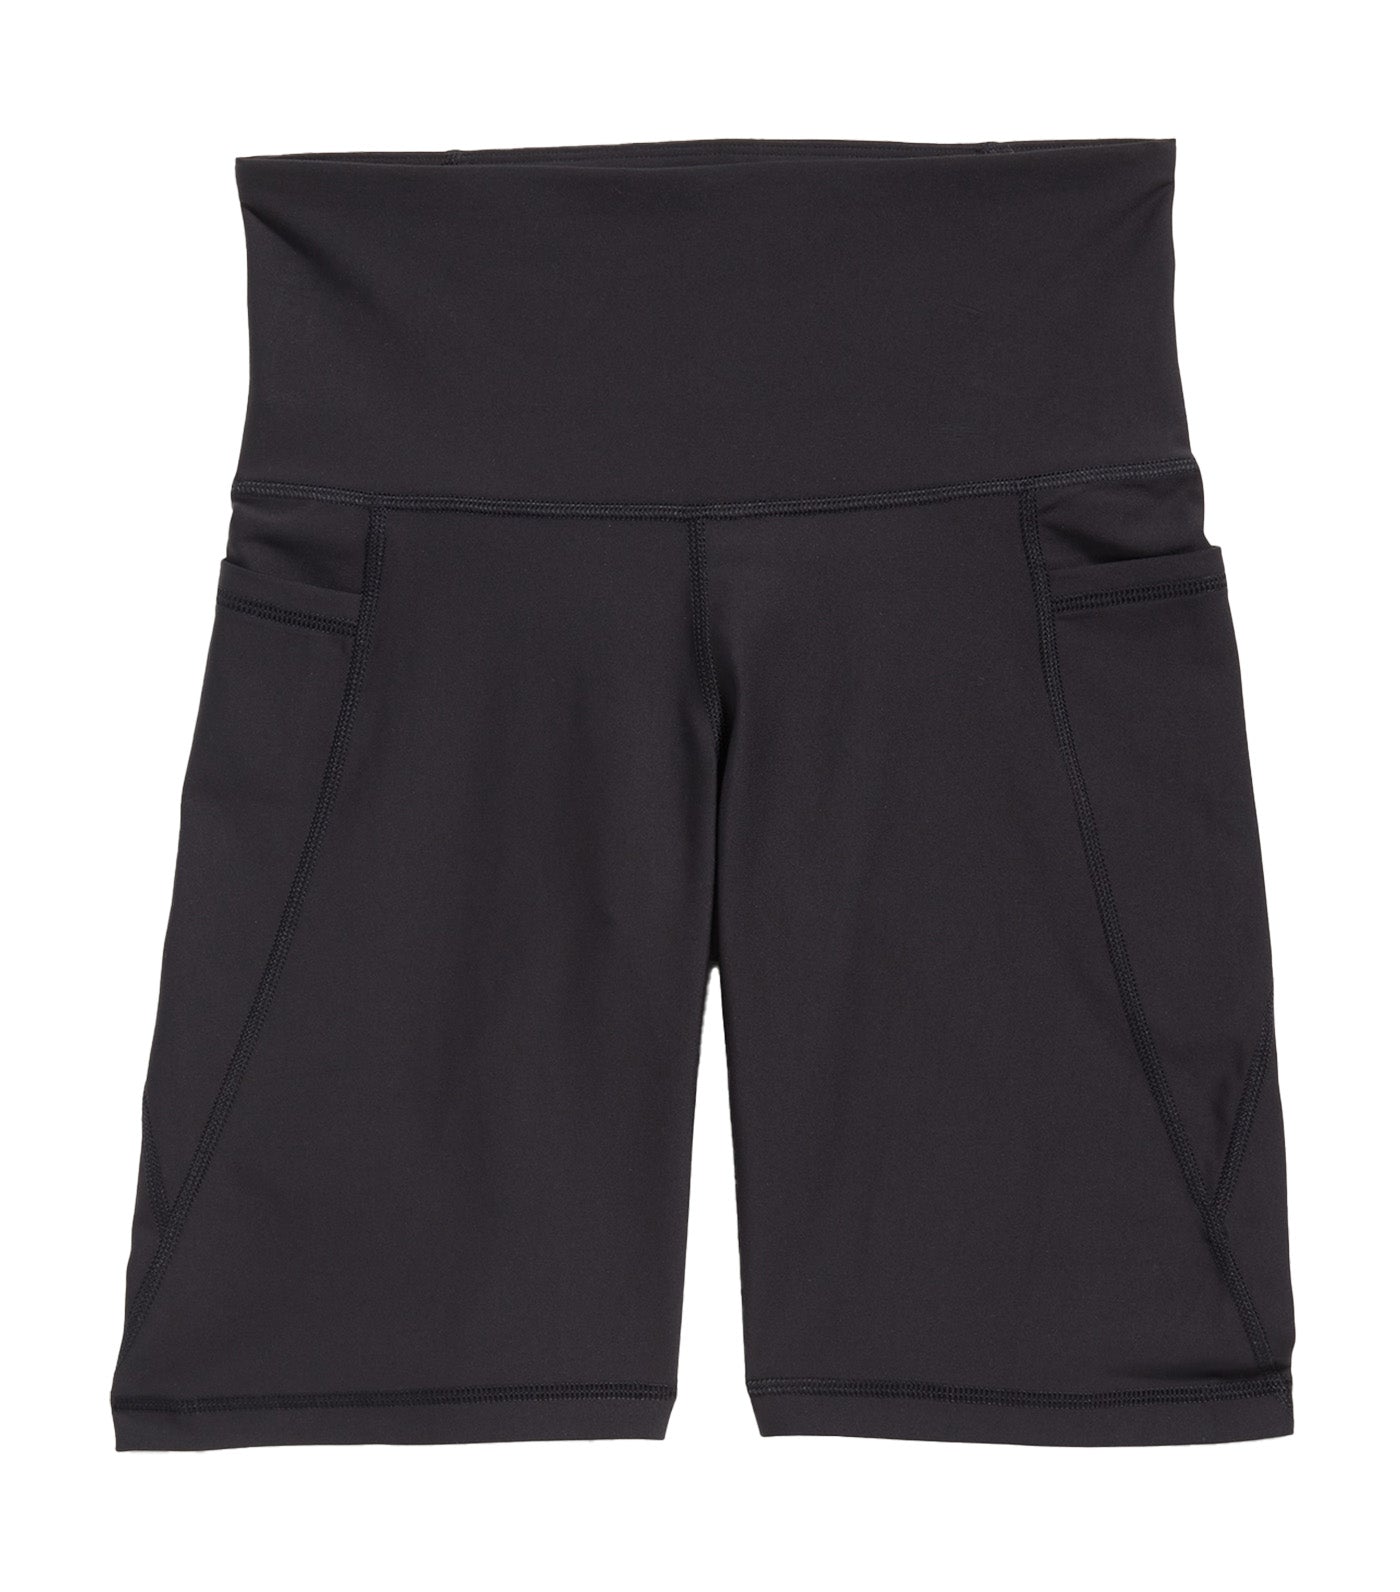 High-Waisted PowerSoft Side-Pocket Biker Shorts for Women - 8-Inch Inseam Black Jack